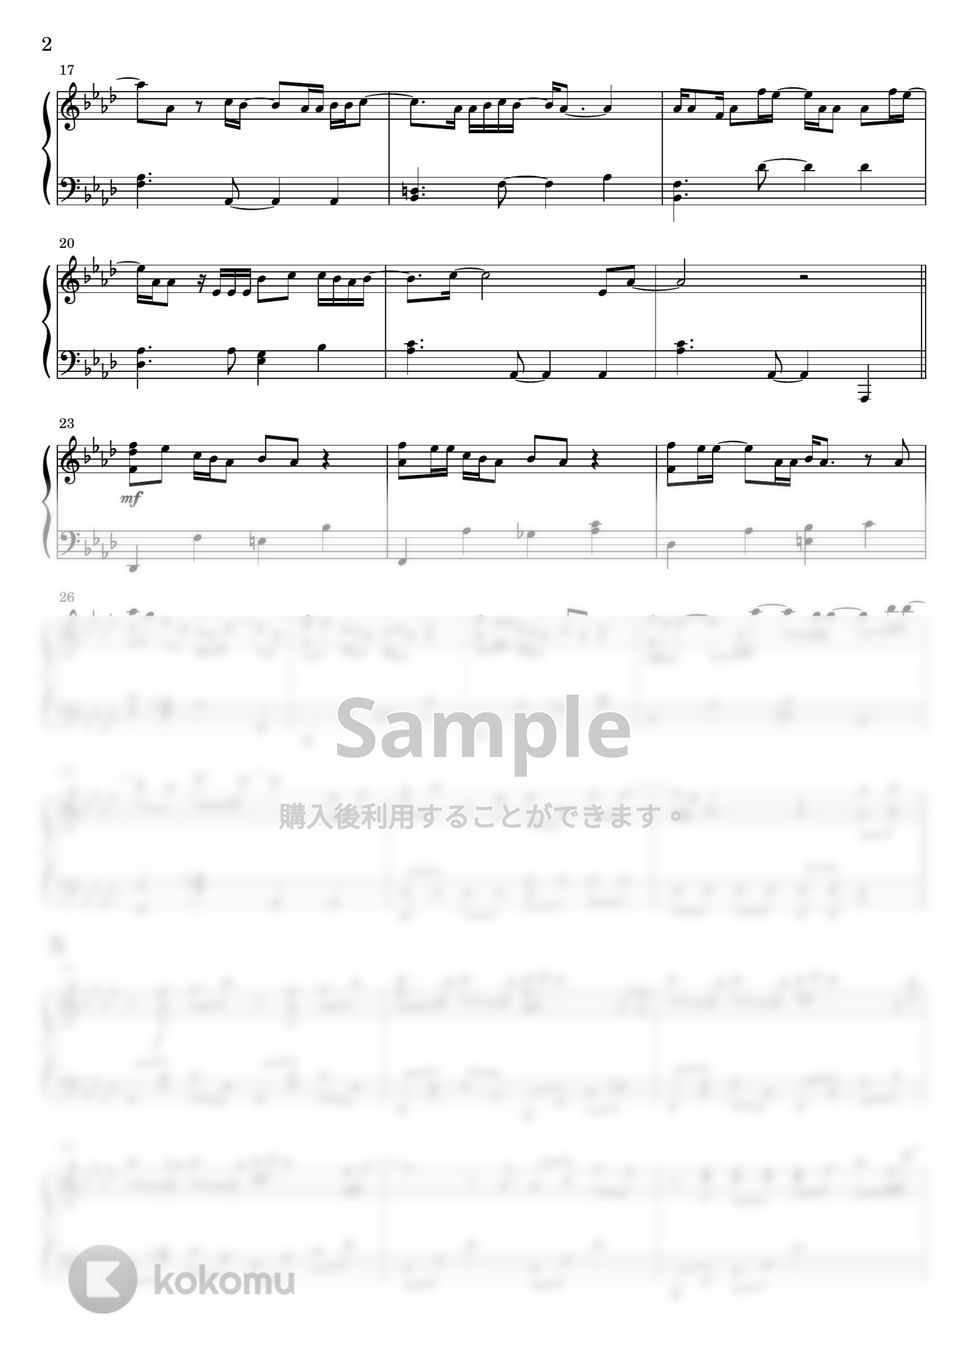 Official髭男dism - Pretender(フルサイズver.) (ピアノソロ) by Miz